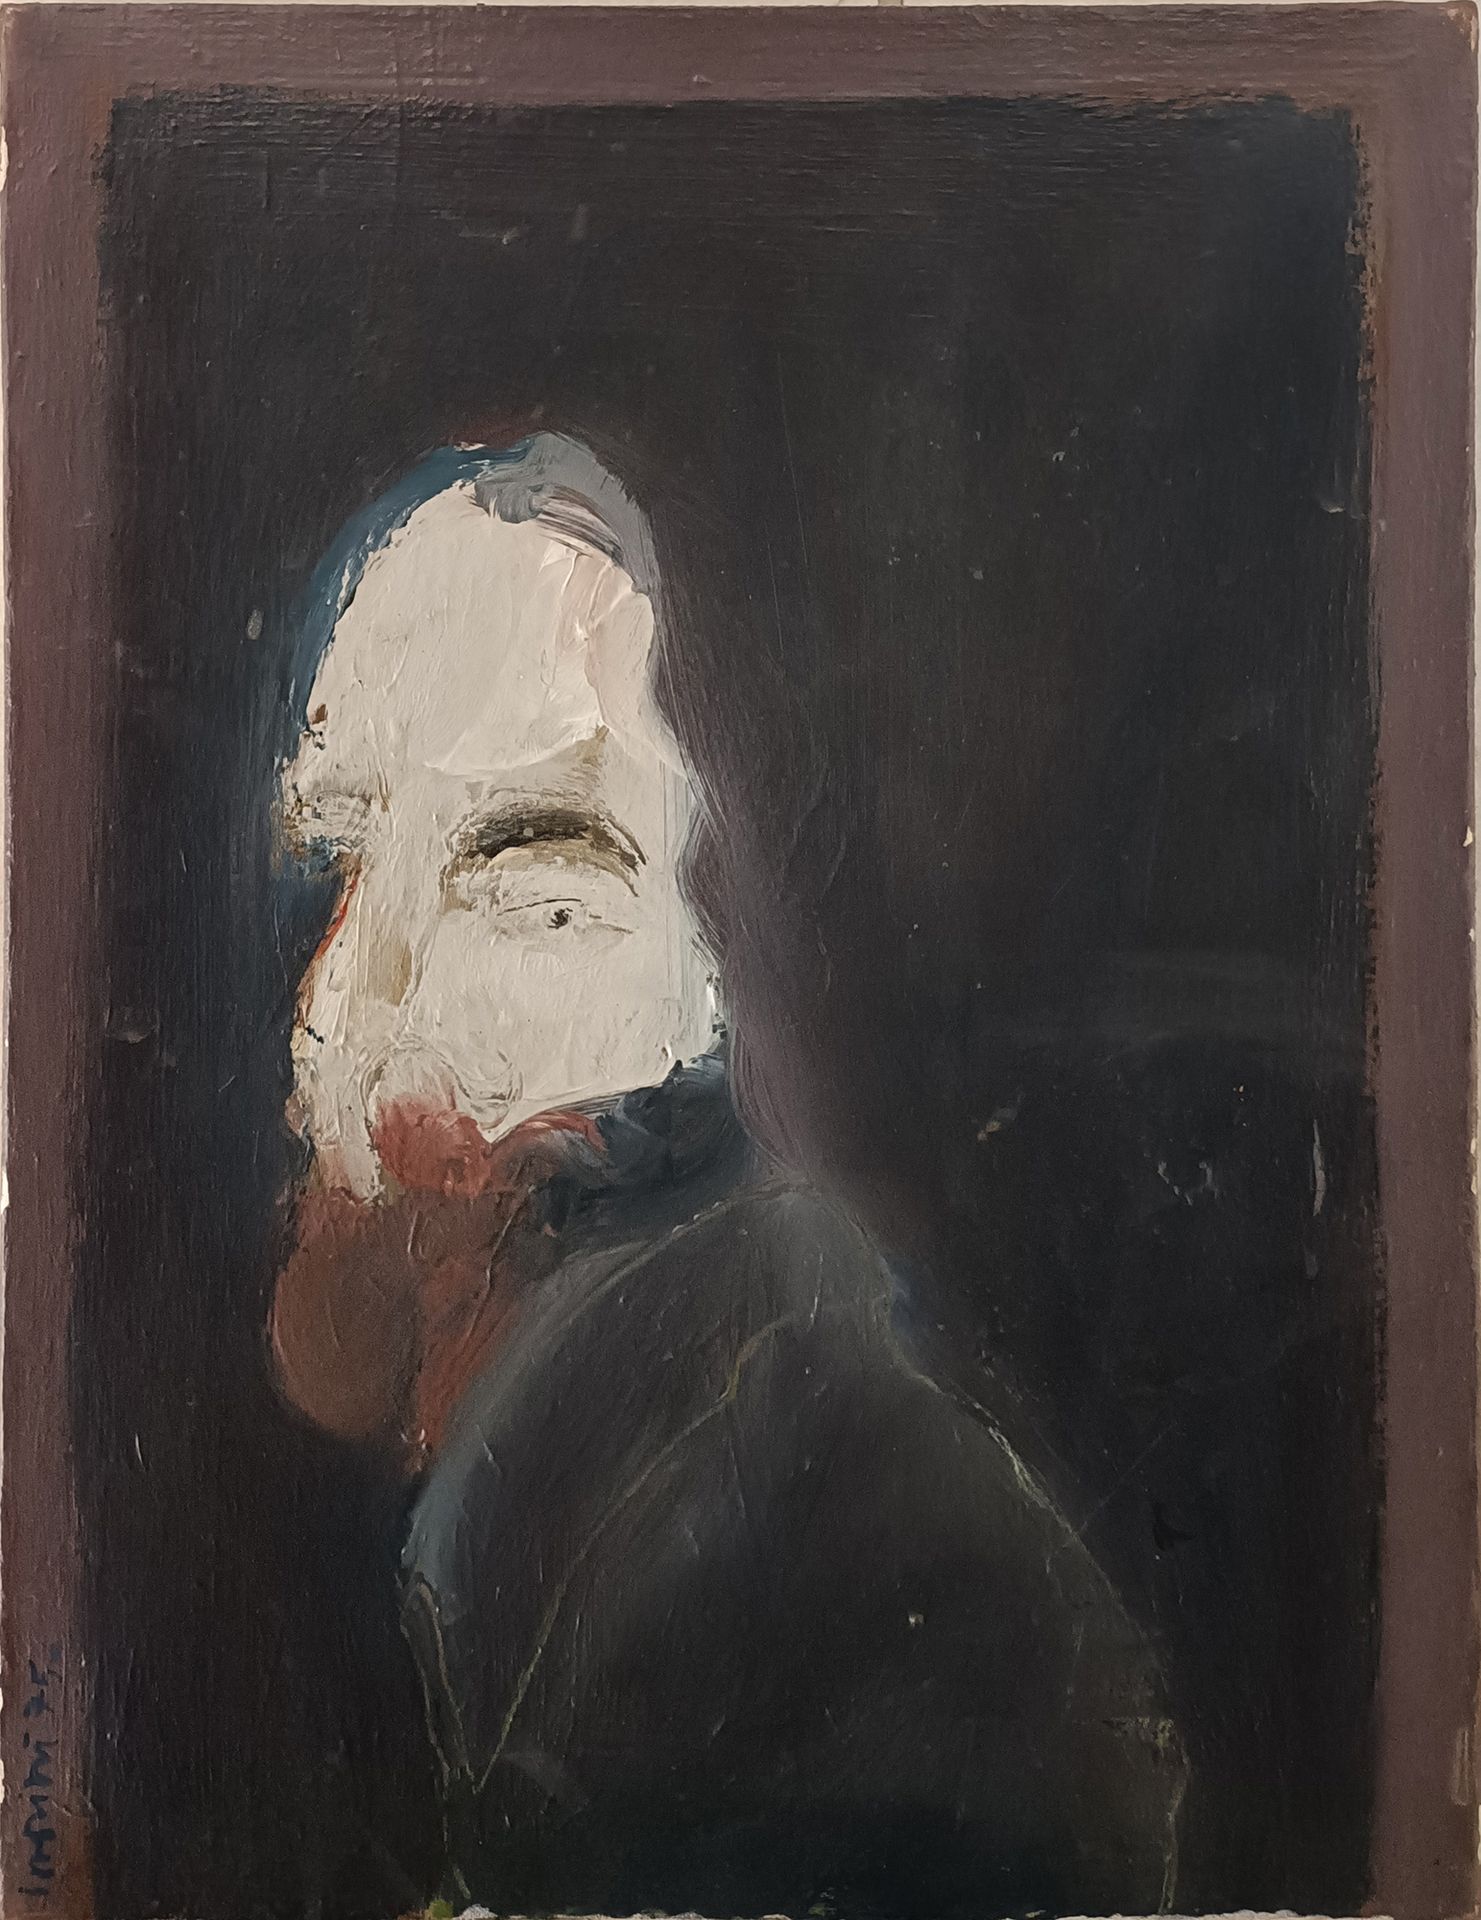 Claude MORINI (Limoges 1939 - Nice 1982) Selbstporträt, 1975
Öl auf Leinwand
Am &hellip;